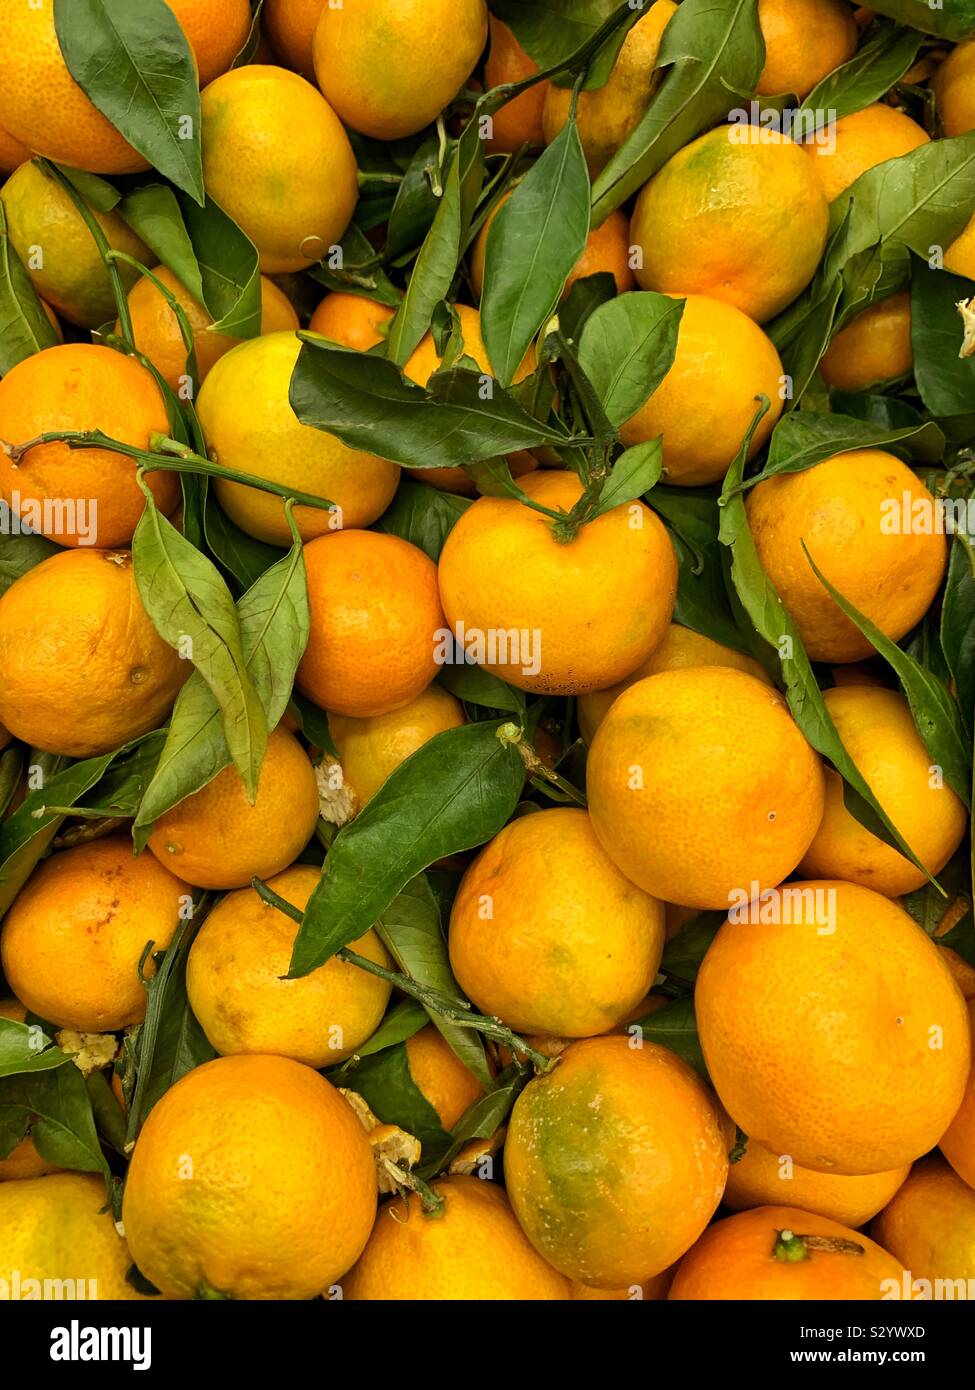 mandarin orange, Citrus reticulata, mandarin, mandarine, orange fruit with green leaves and stems Stock Photo